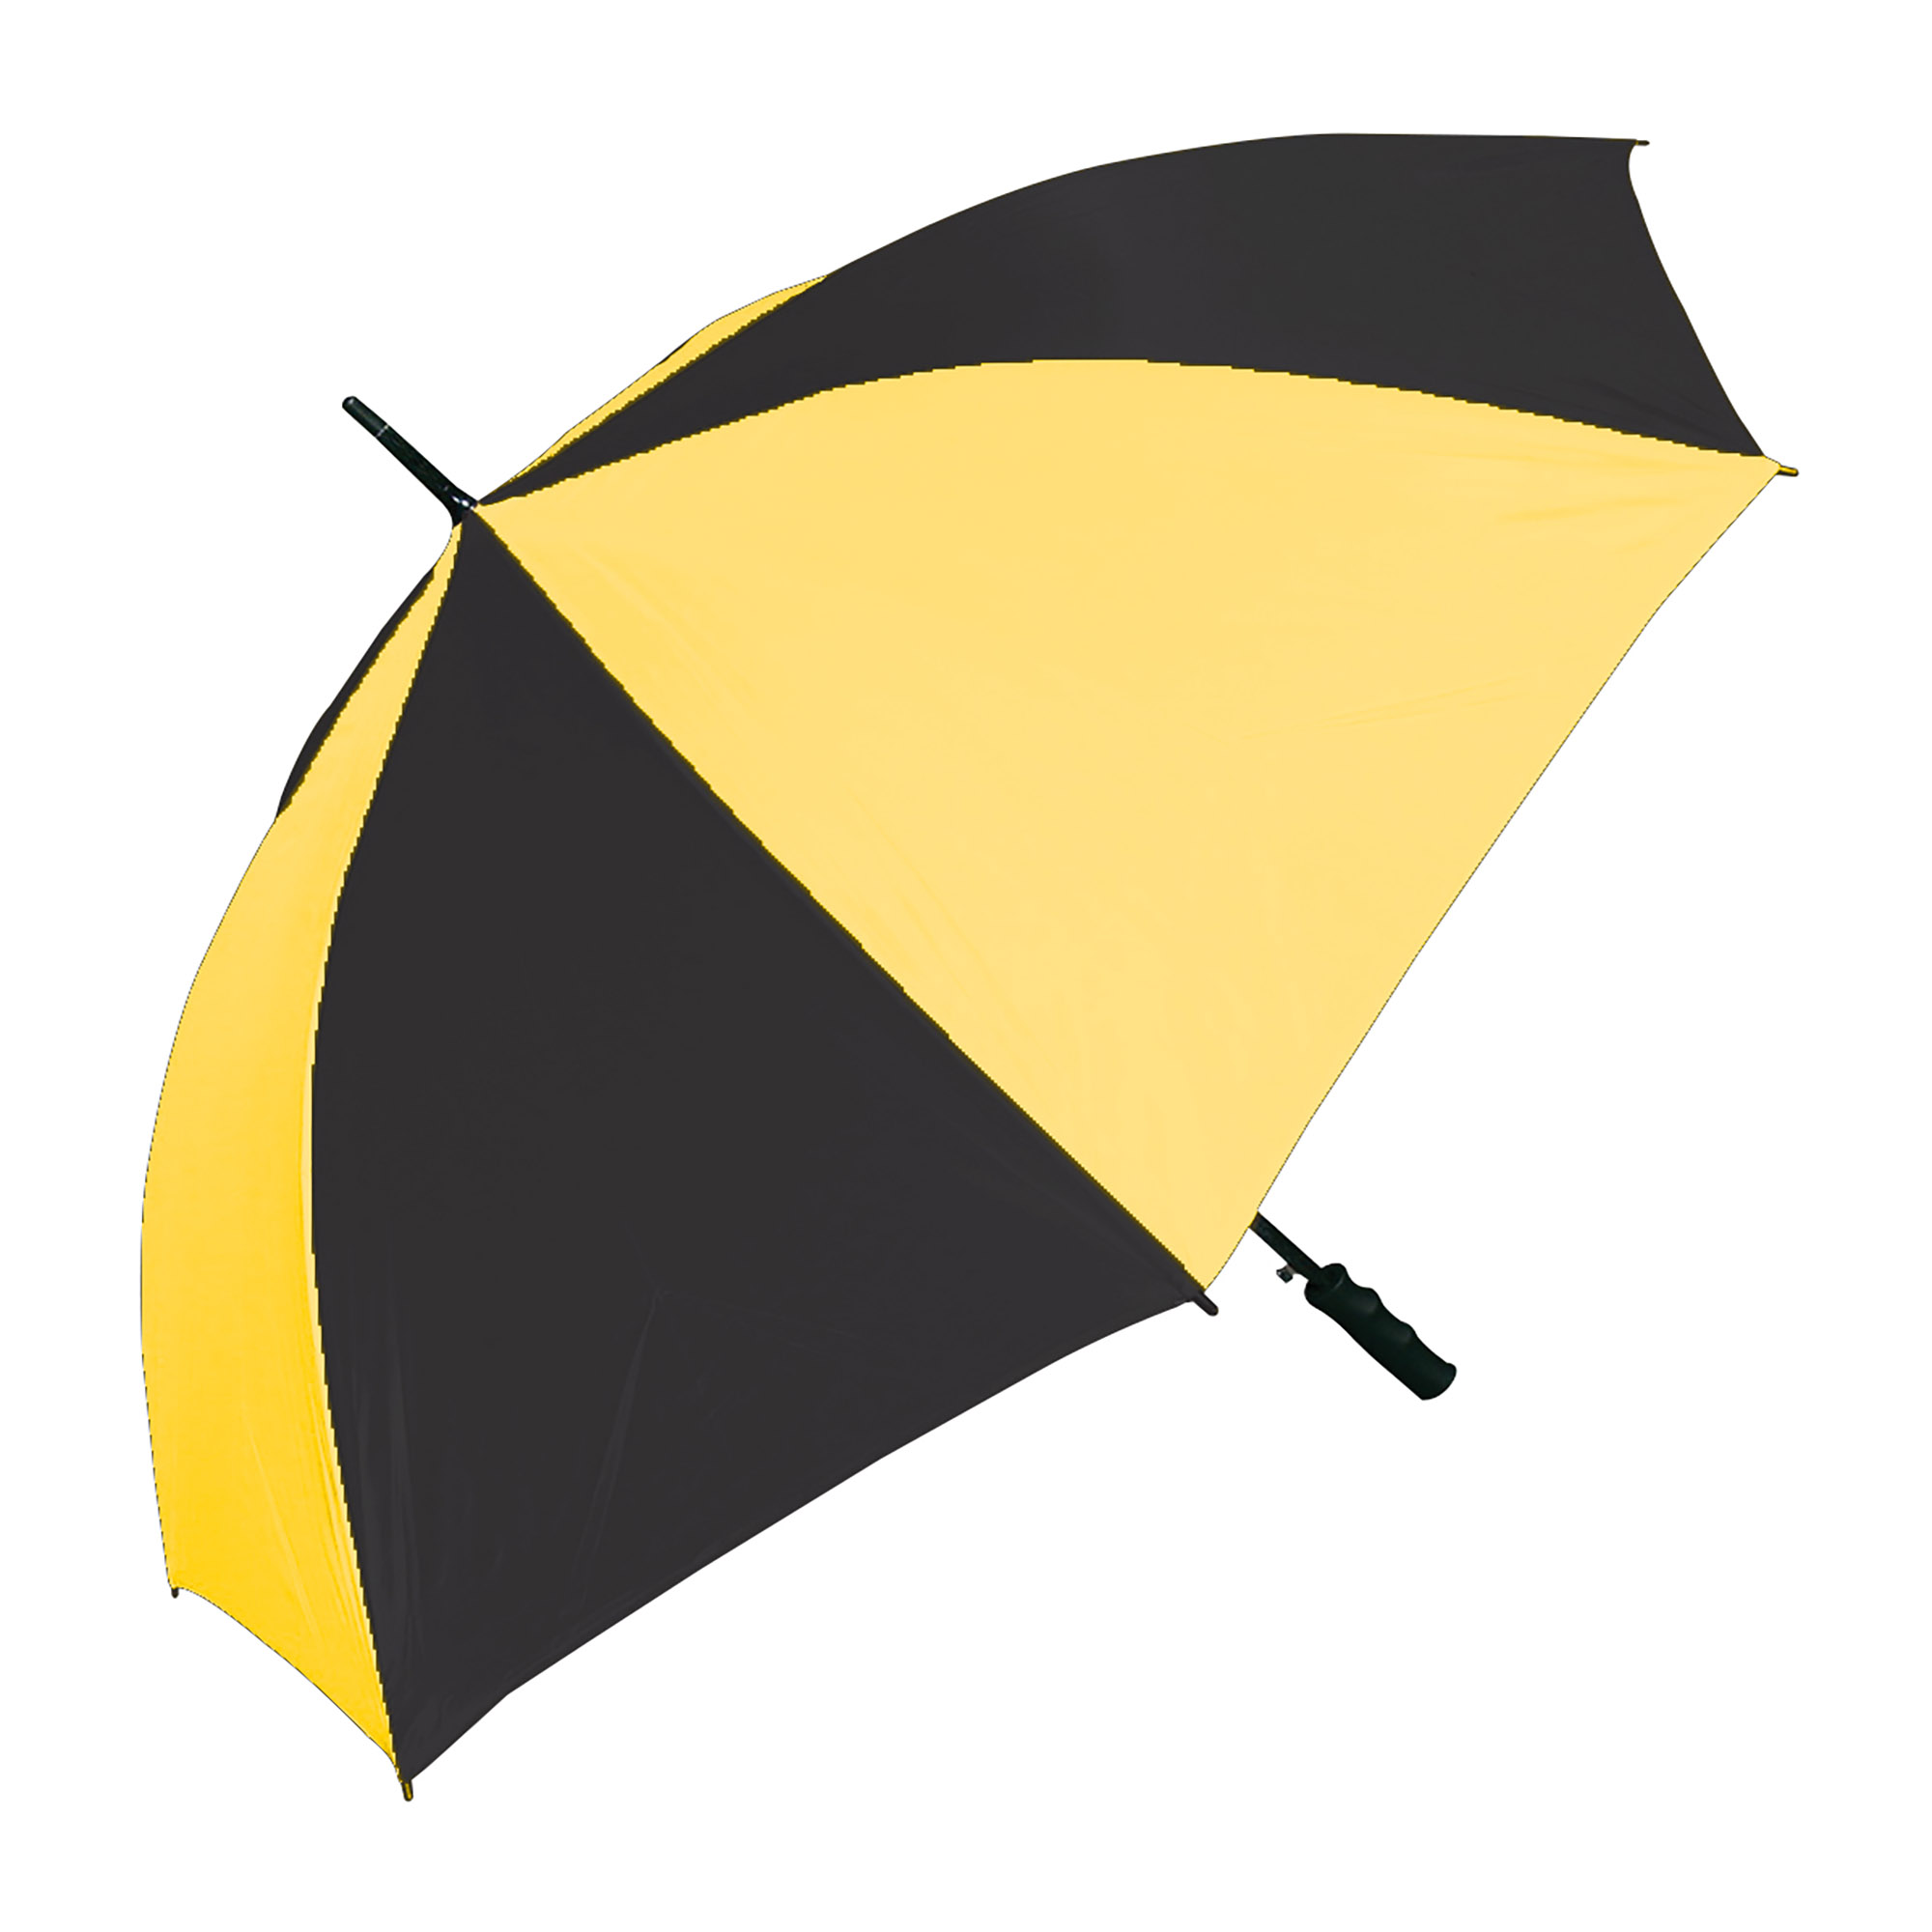 Bulk Promotional Yellow And Black Sands Umbrella Online In Perth Australia